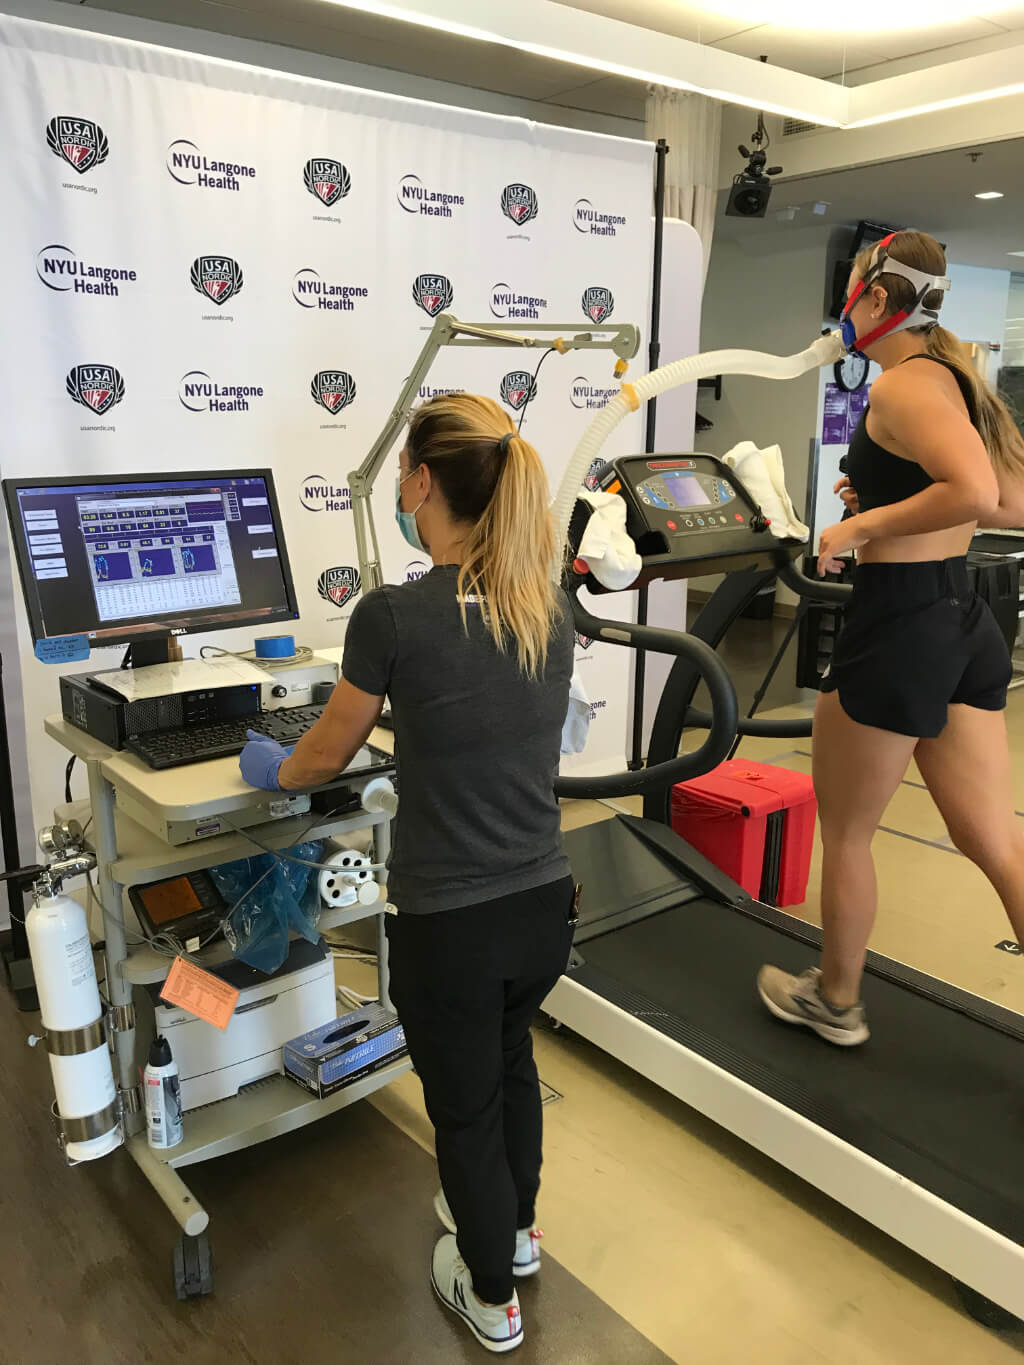 USA Nordic Sport Athlete testing at NYU Langone Health - The Diff